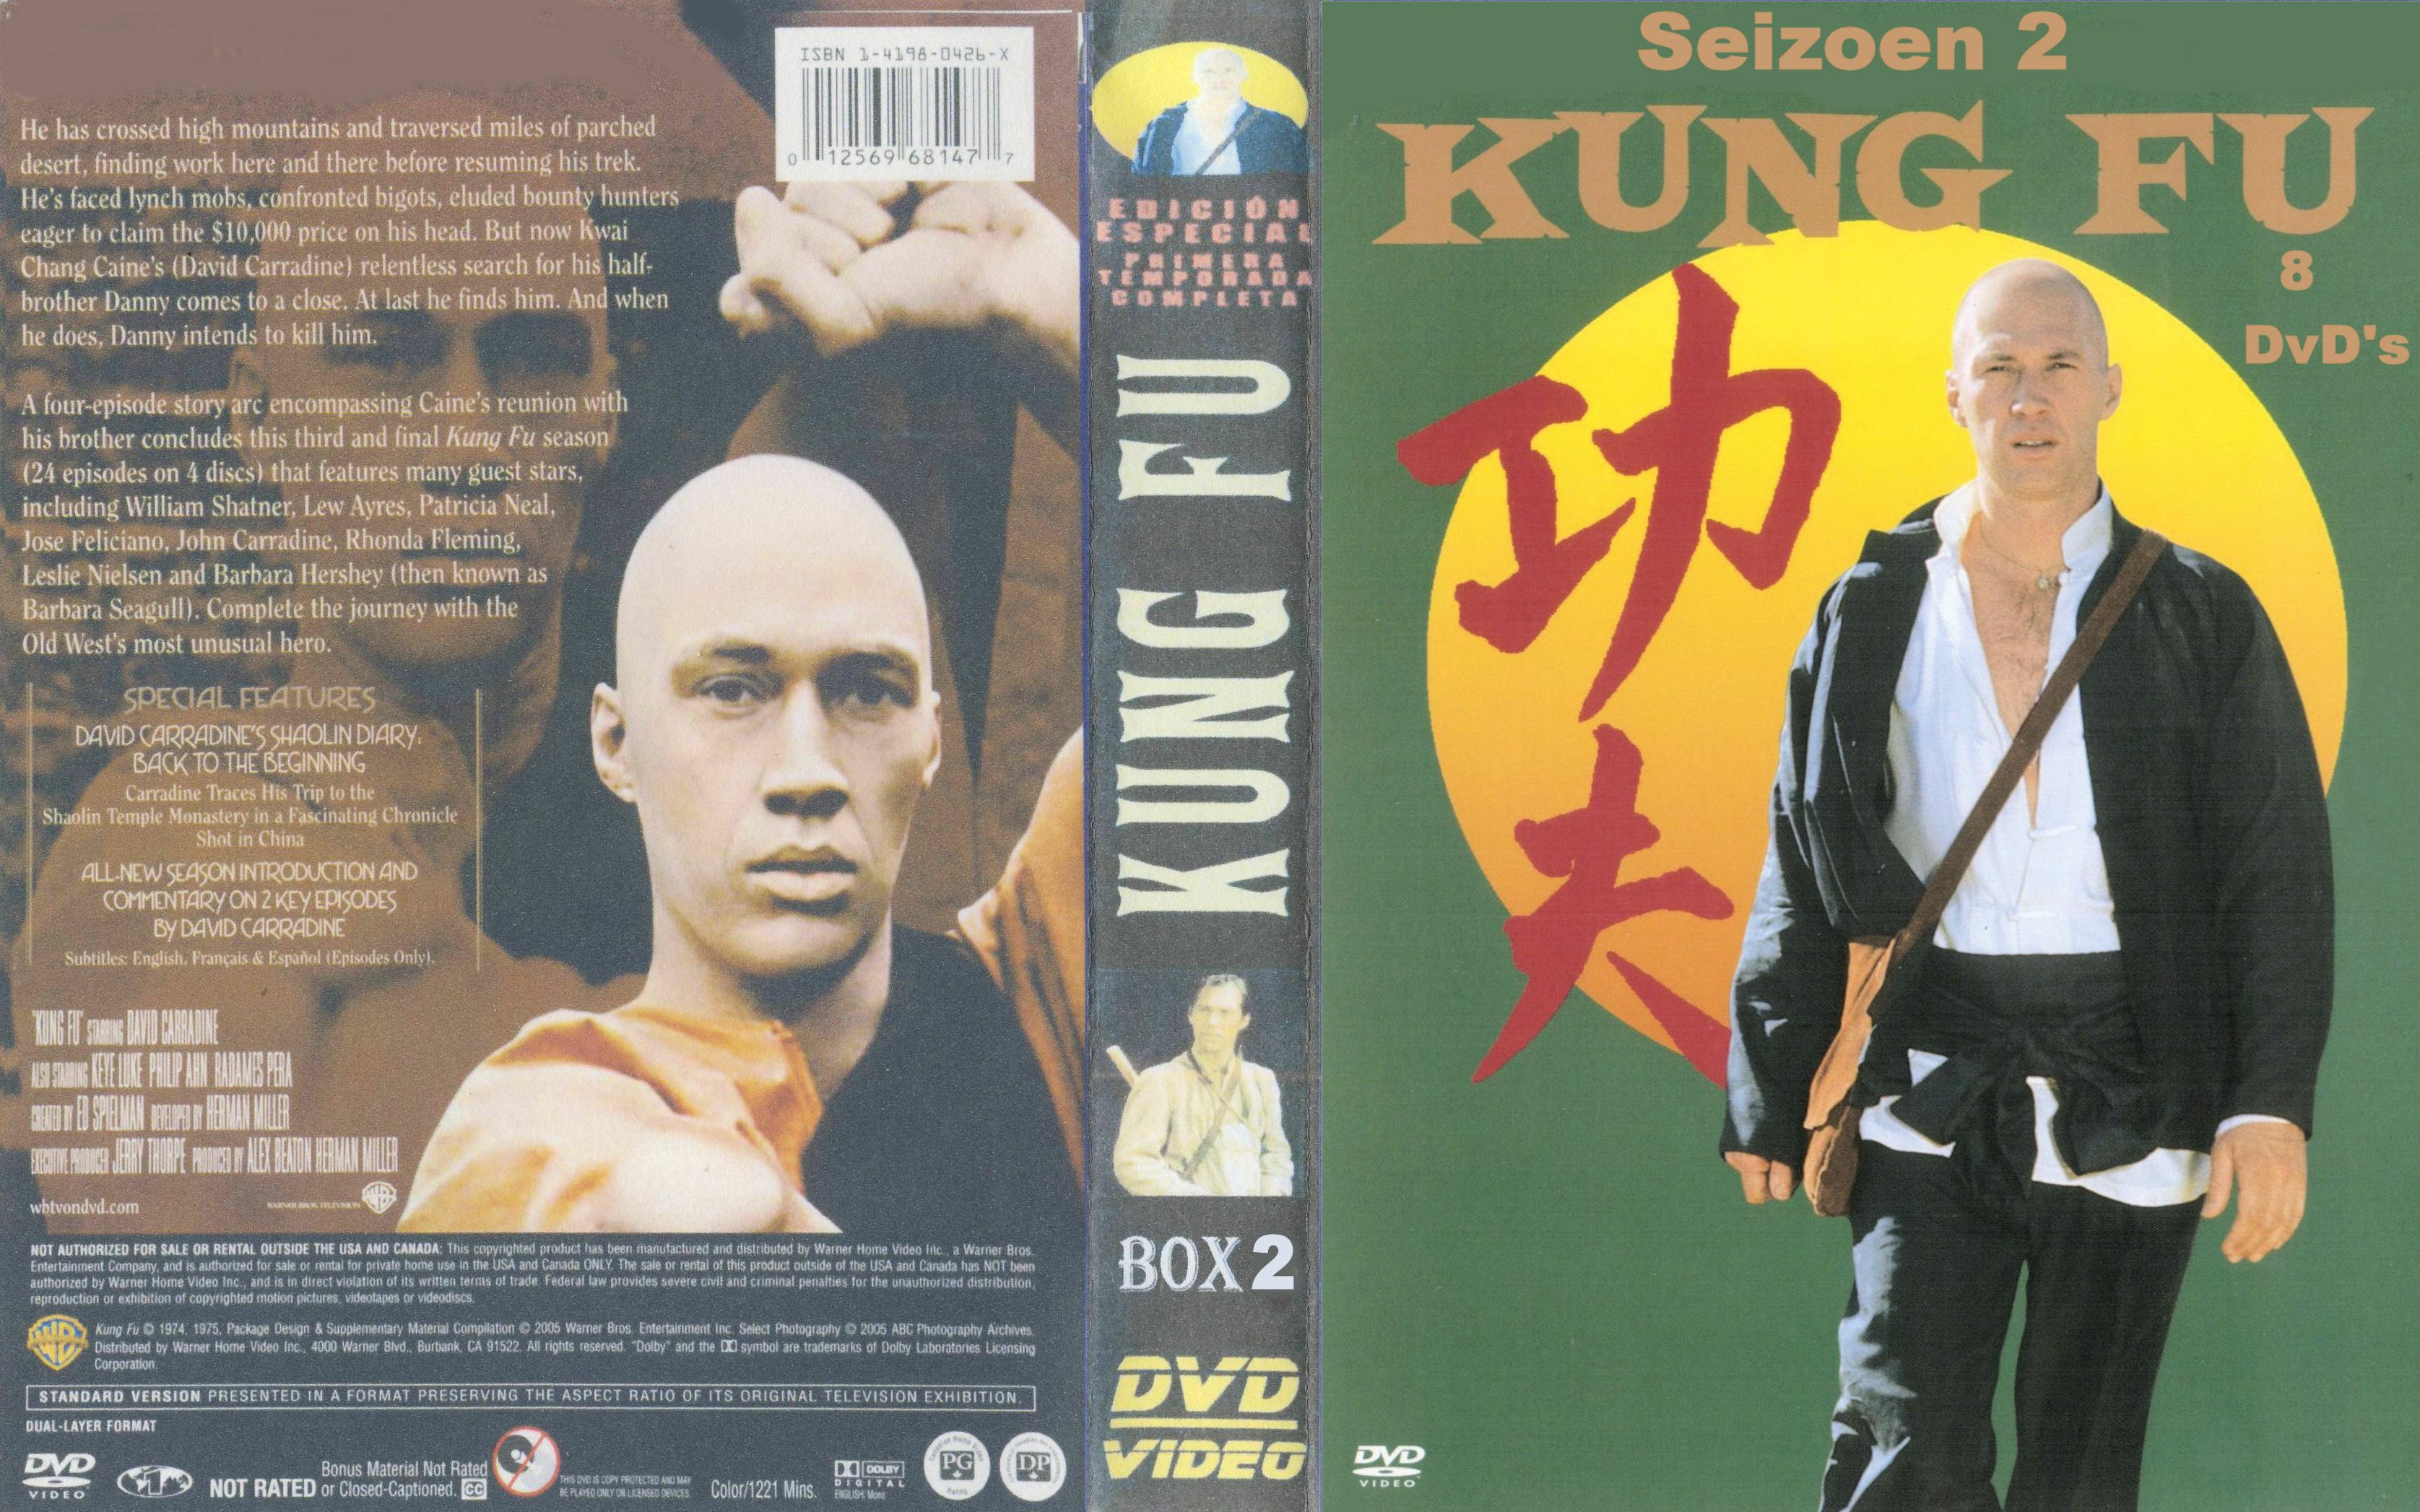 Kung Fu ( David Carradine ) 1973 - 74 Seizoen 2 - DvD 8 Finale